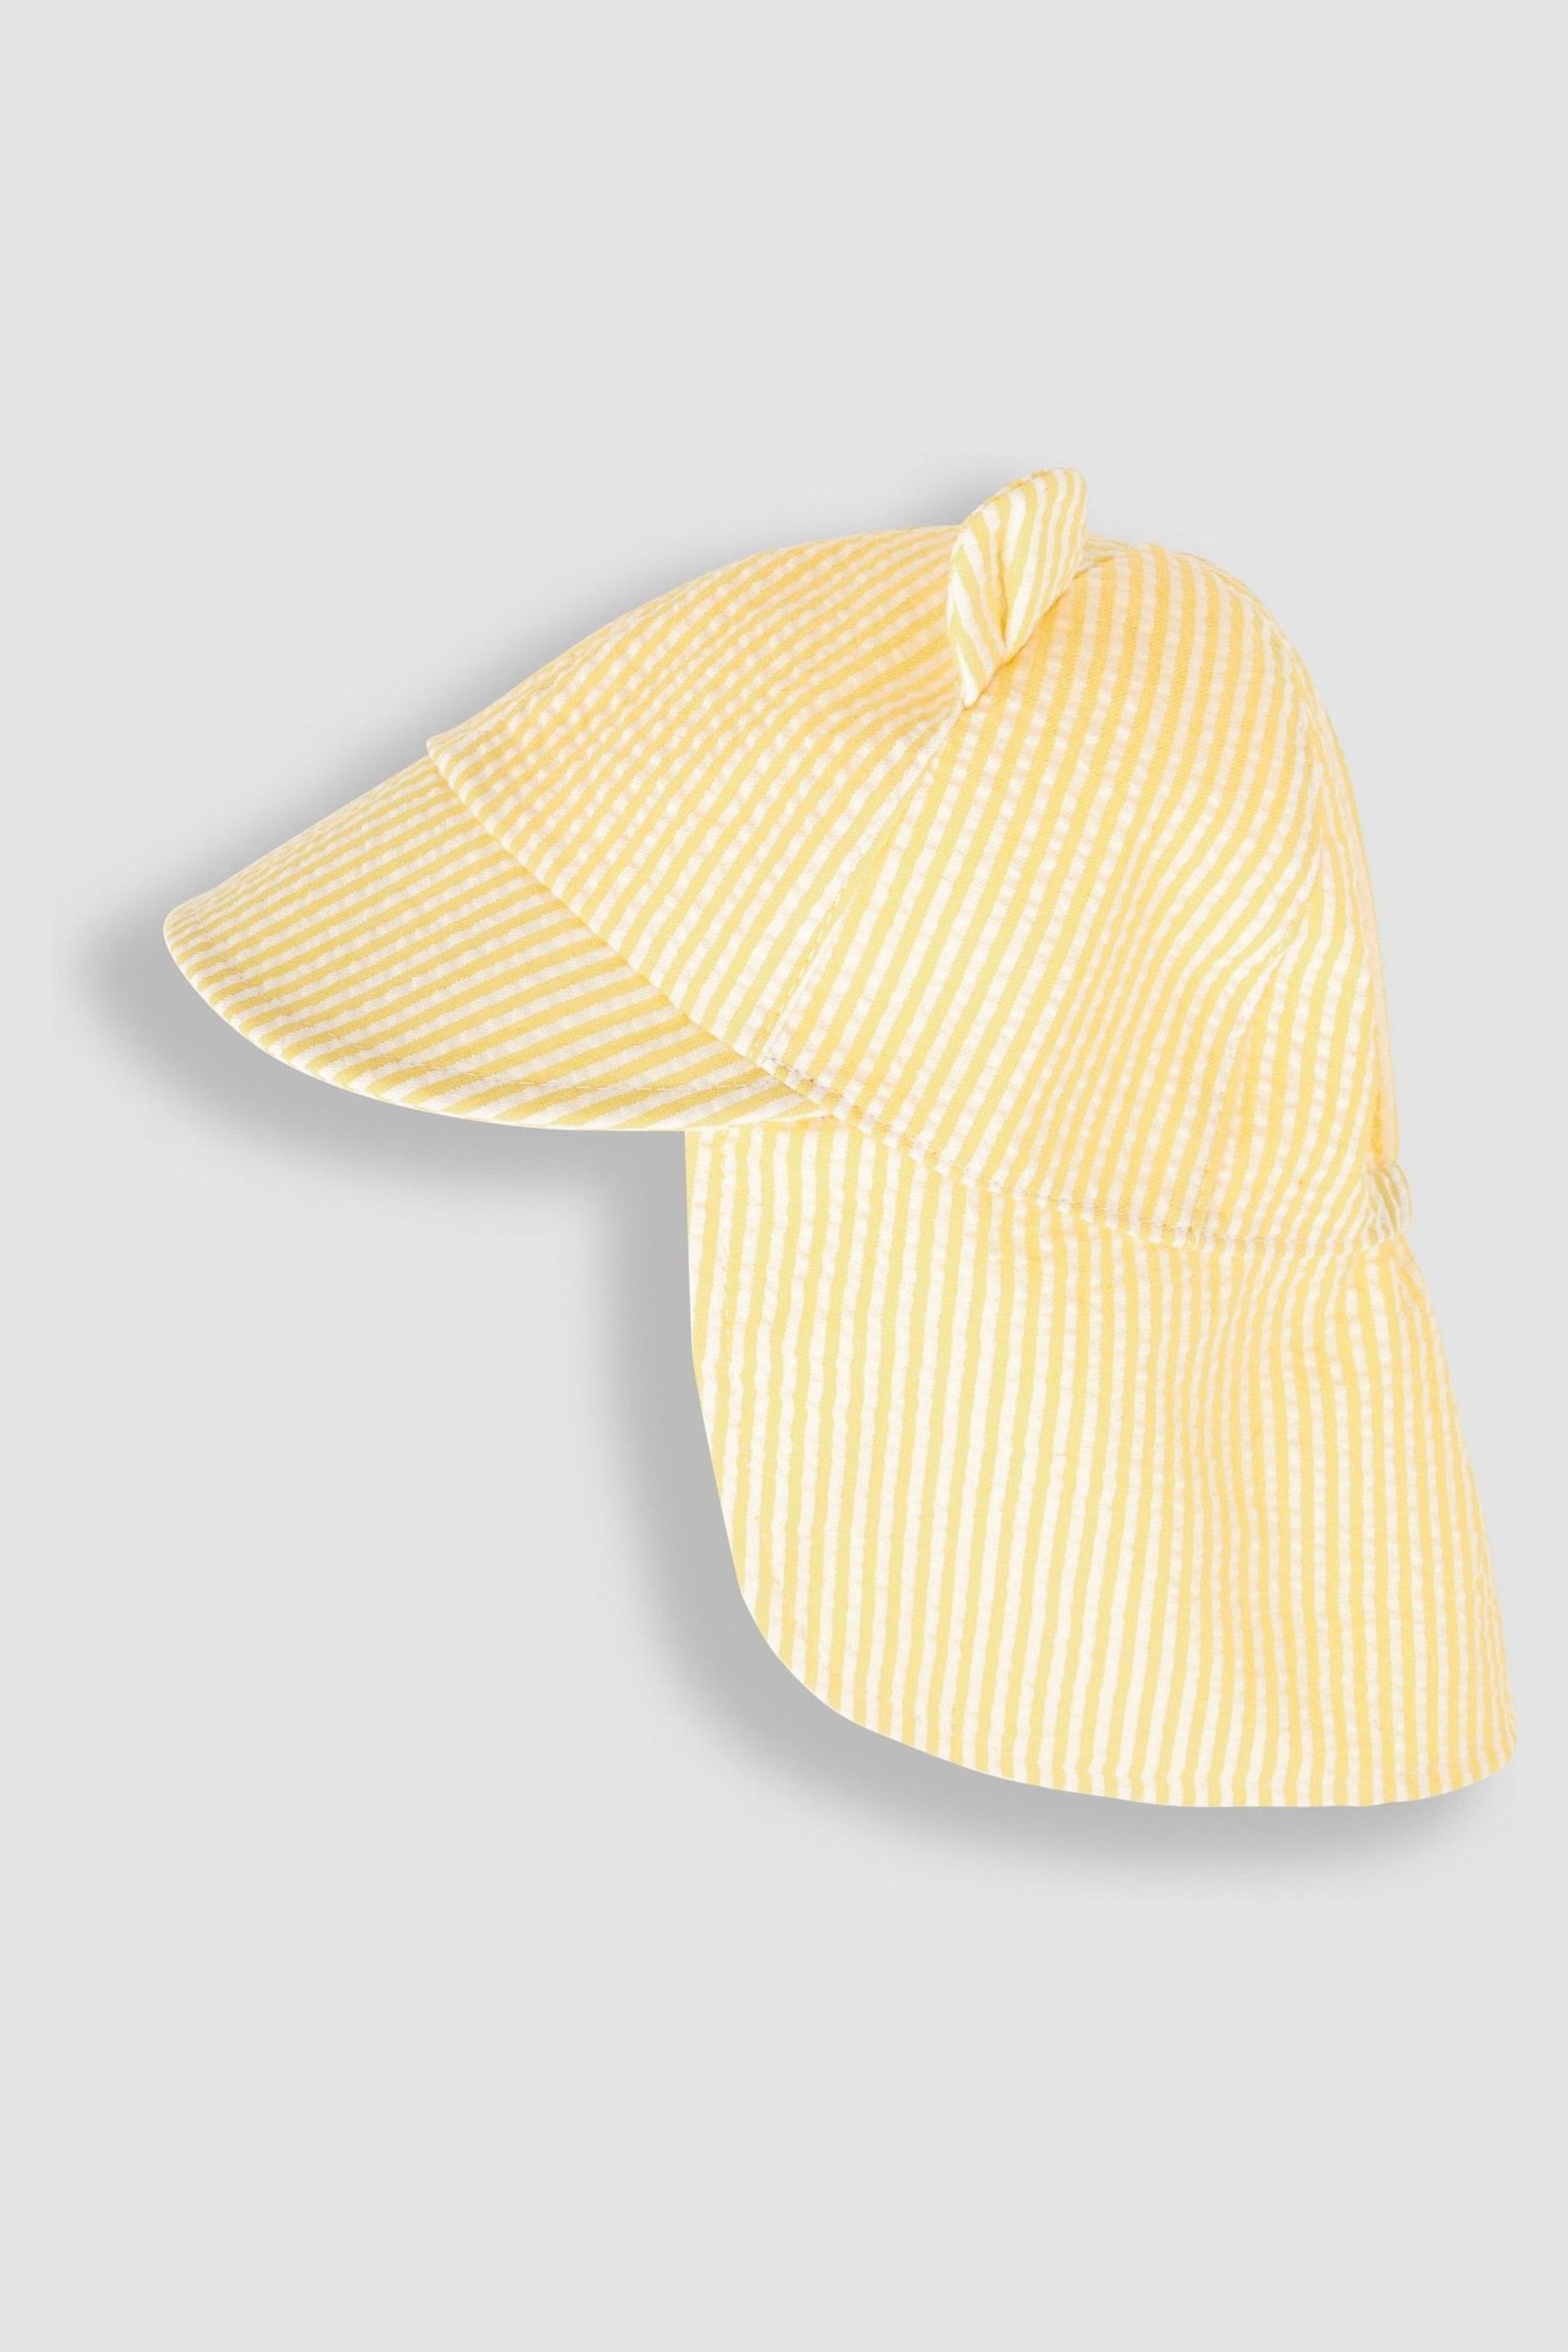 JoJo Maman Bébé Yellow Stripe Legionnaire Cap - Image 1 of 3